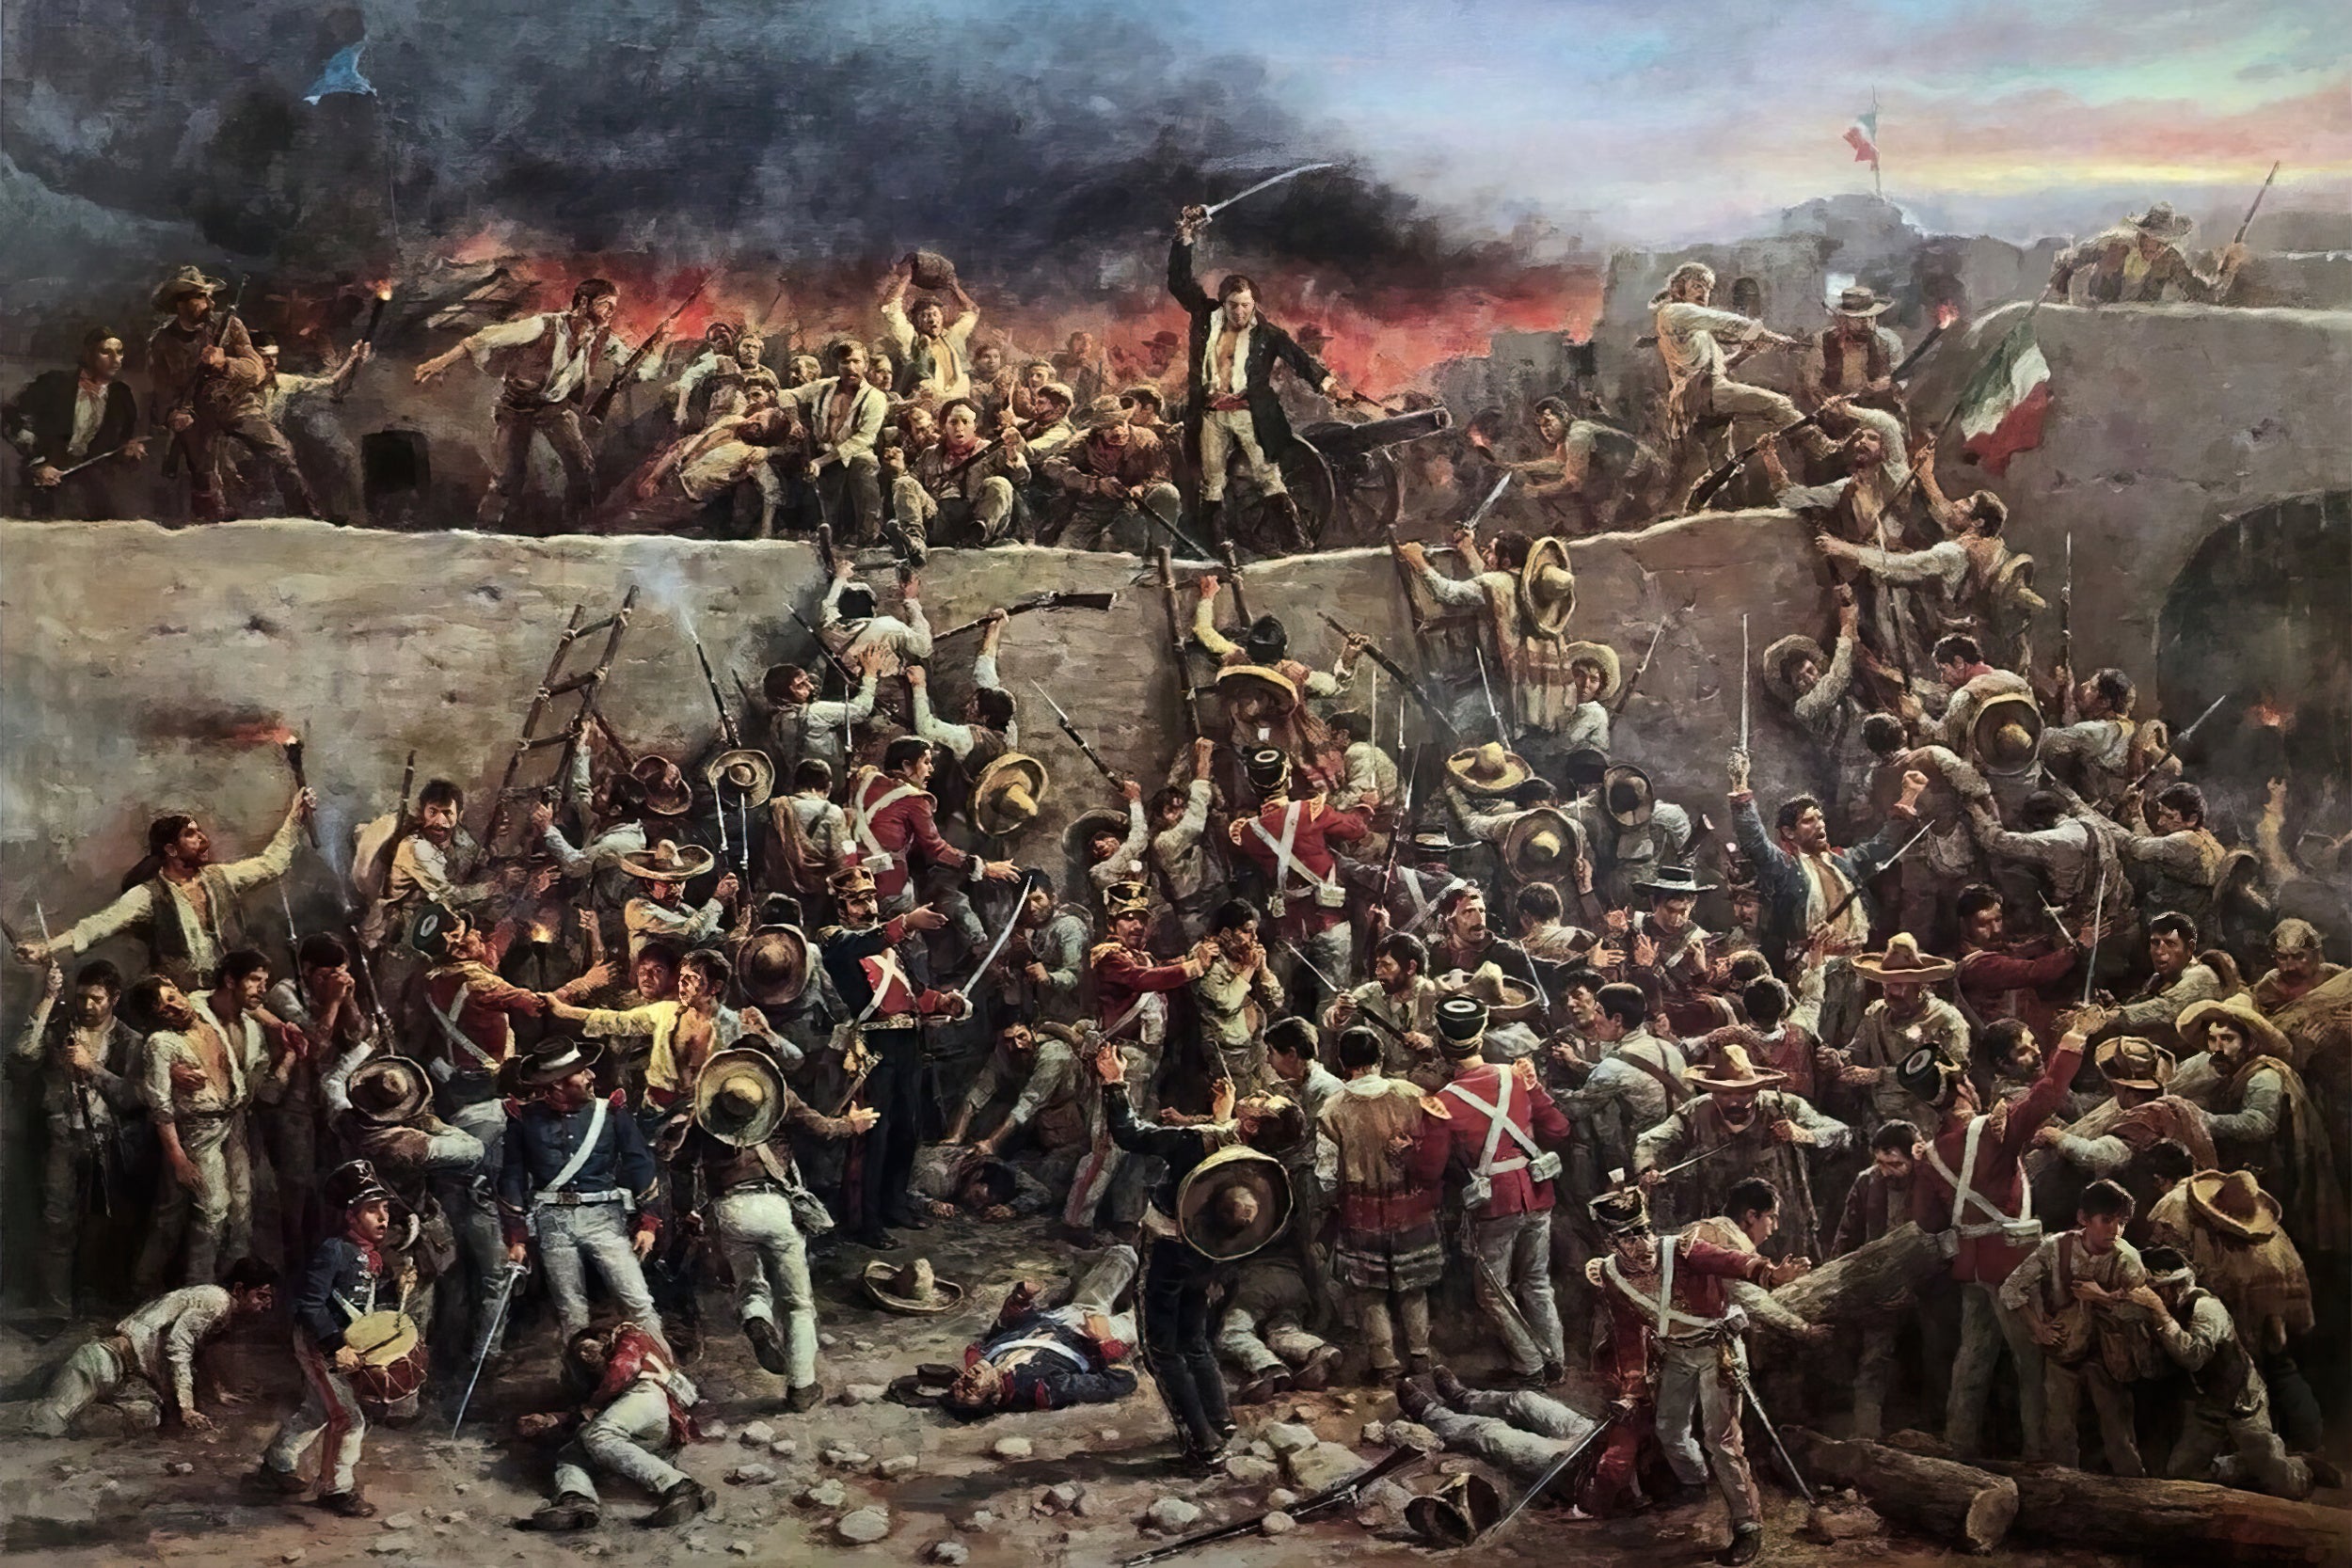 Siege of the Alamo (Painting)